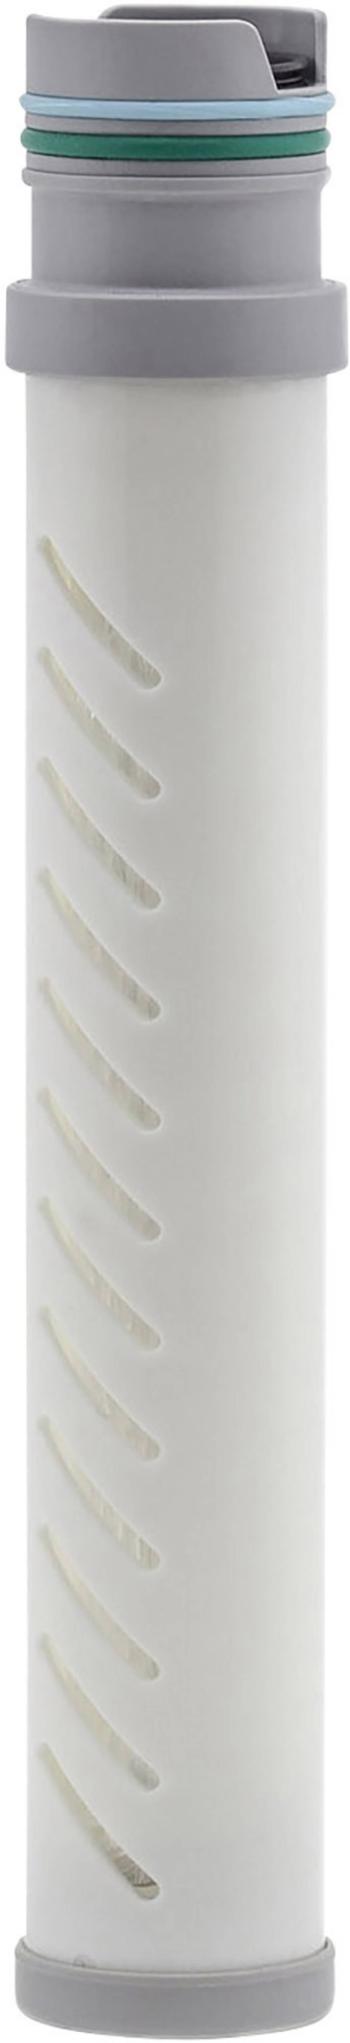 LifeStraw vodný filter plast 006-6002123 Go 2-Filter (white)